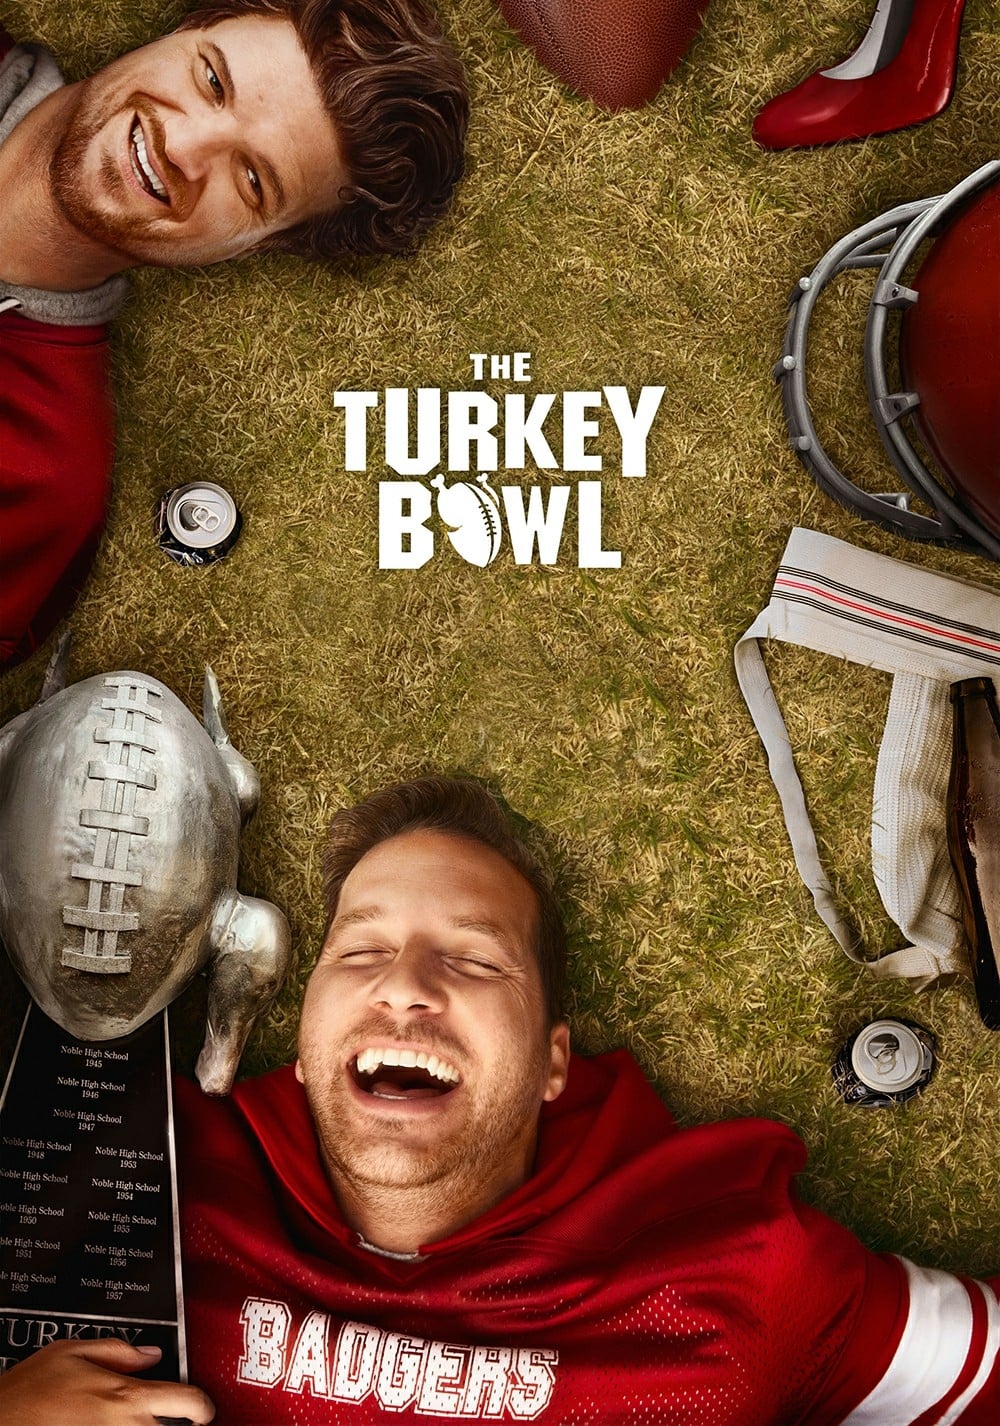 The Turkey Bowl film